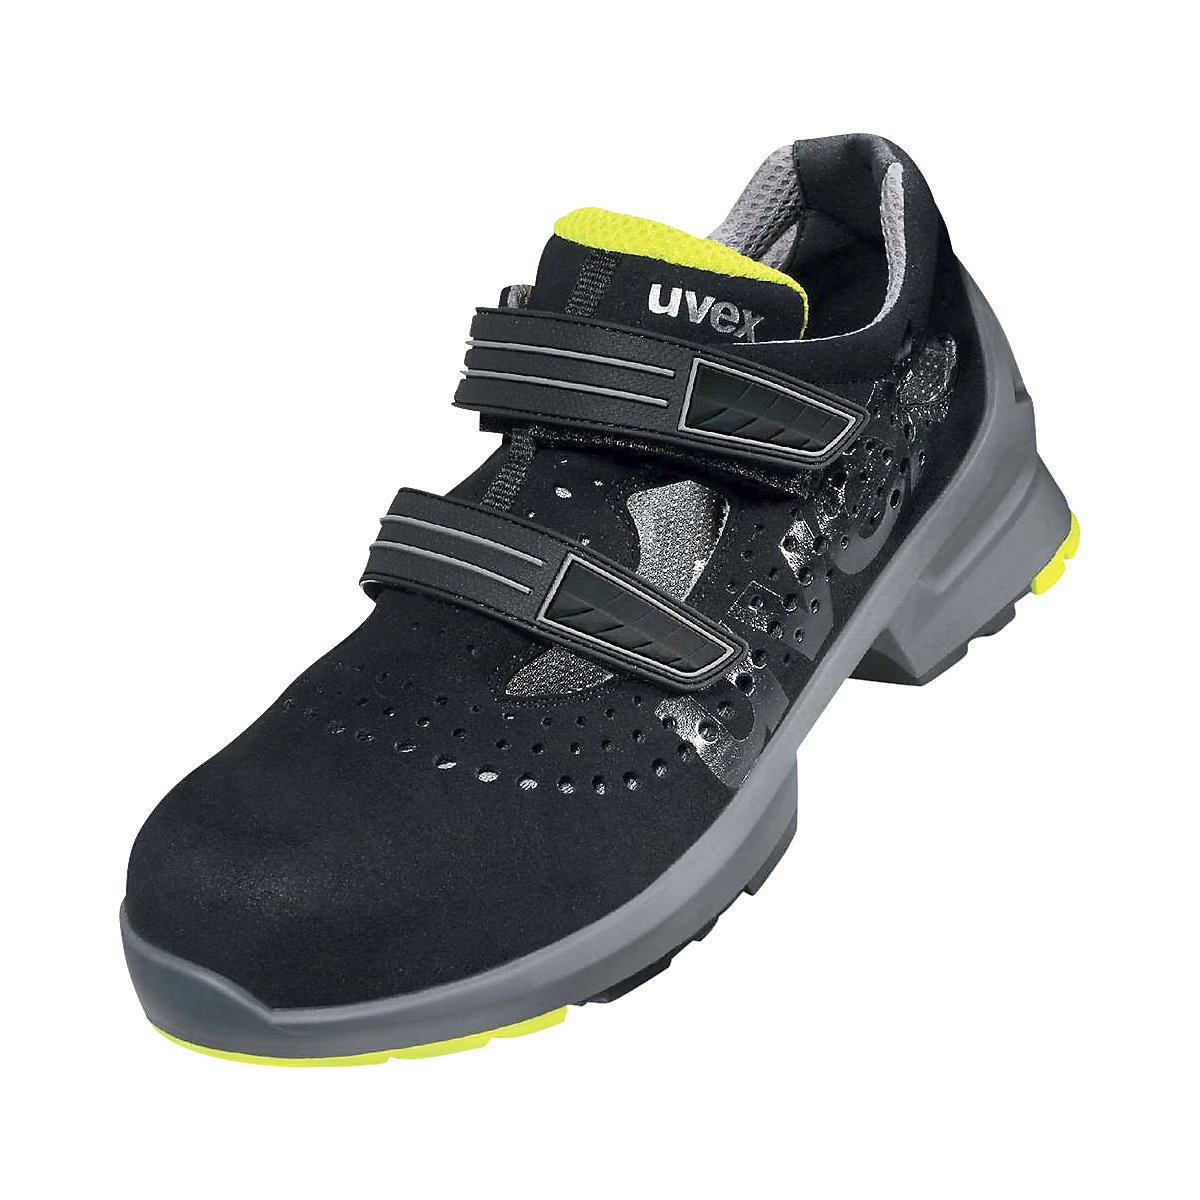 ESD S1 SRC safety sandal - Uvex